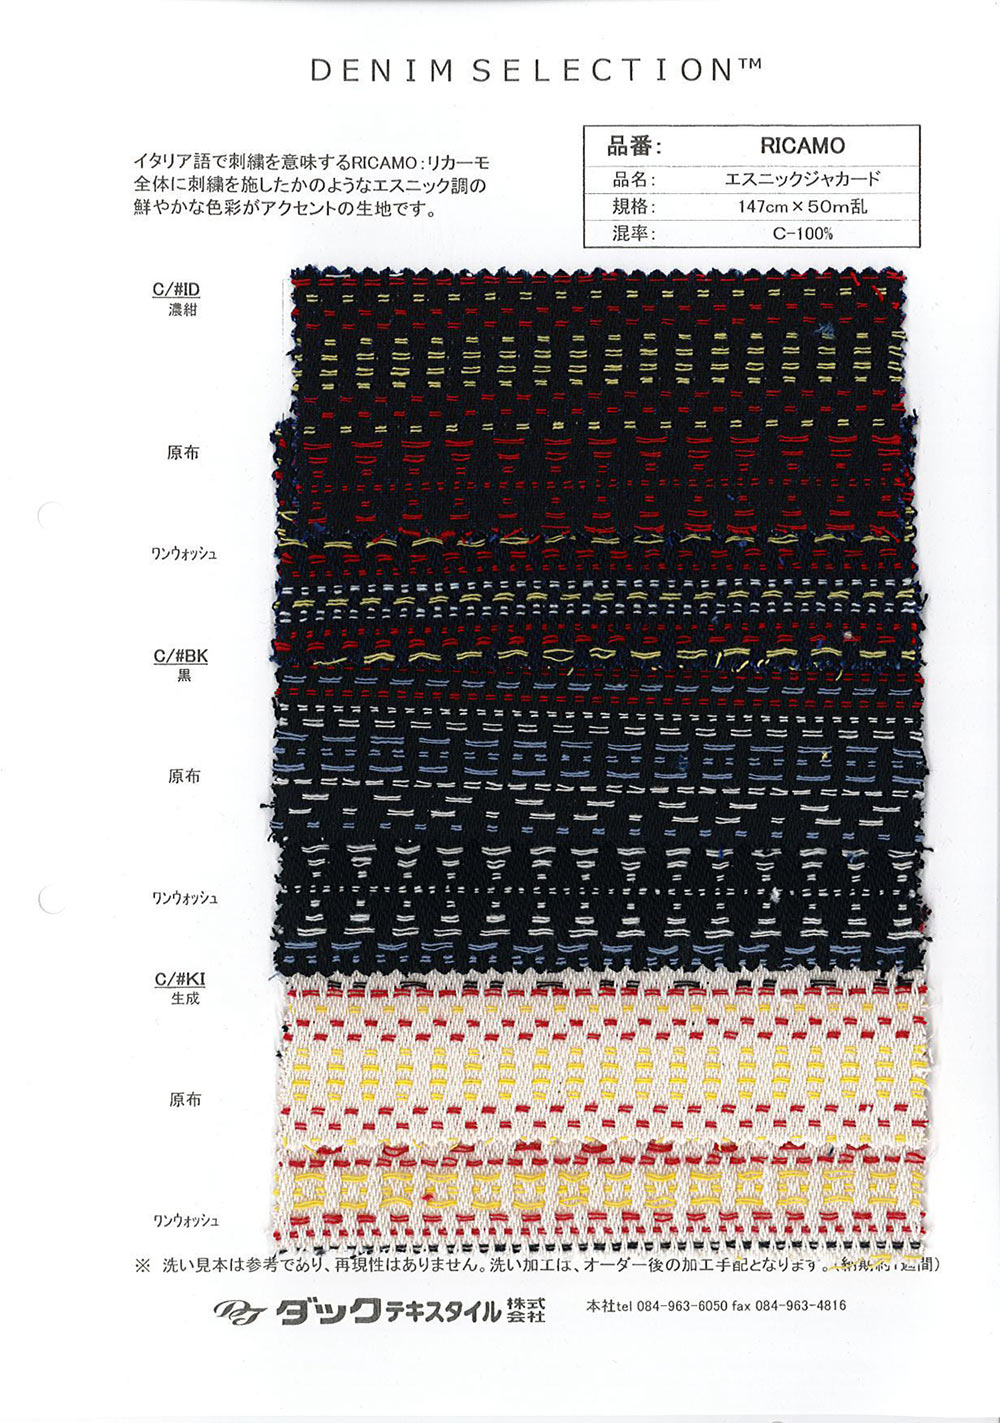 RICAMO [Textilgewebe] DUCK TEXTILE